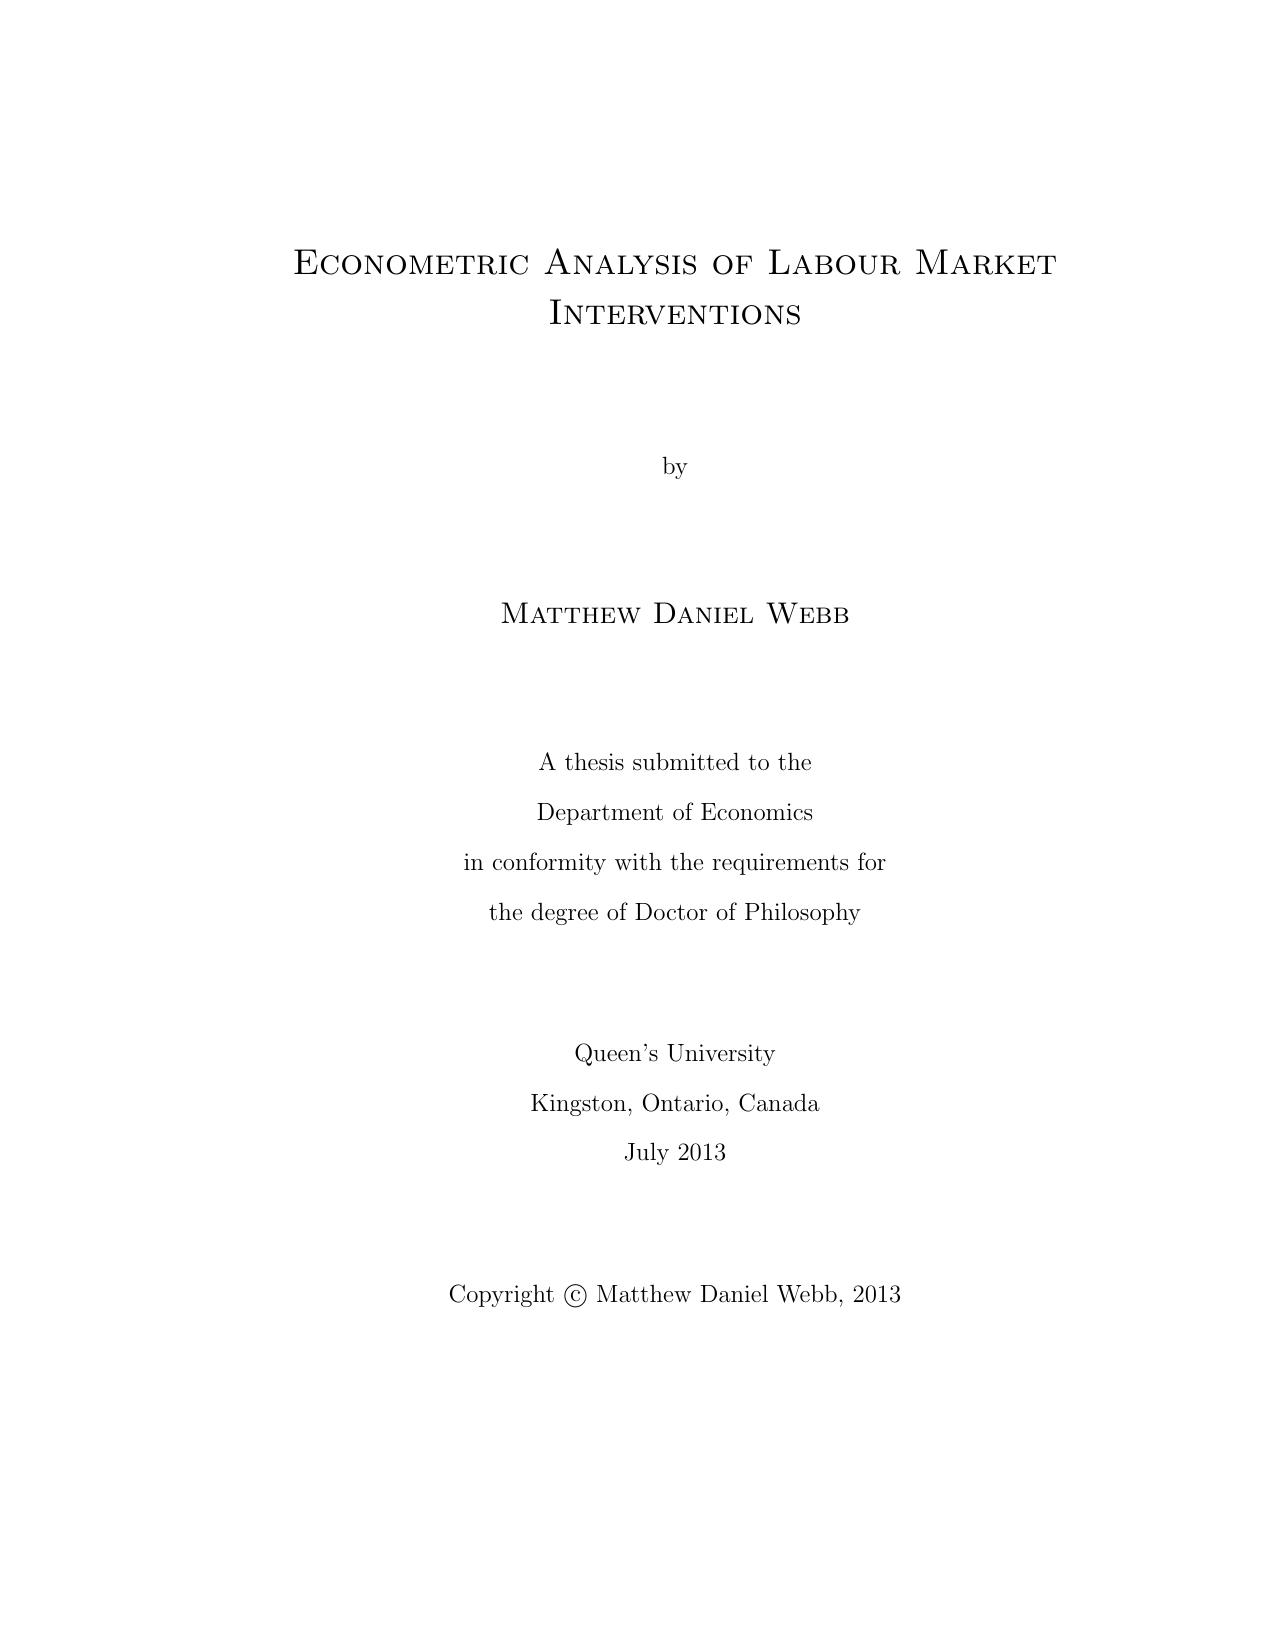 econometric analysis of labour market intervention 2013